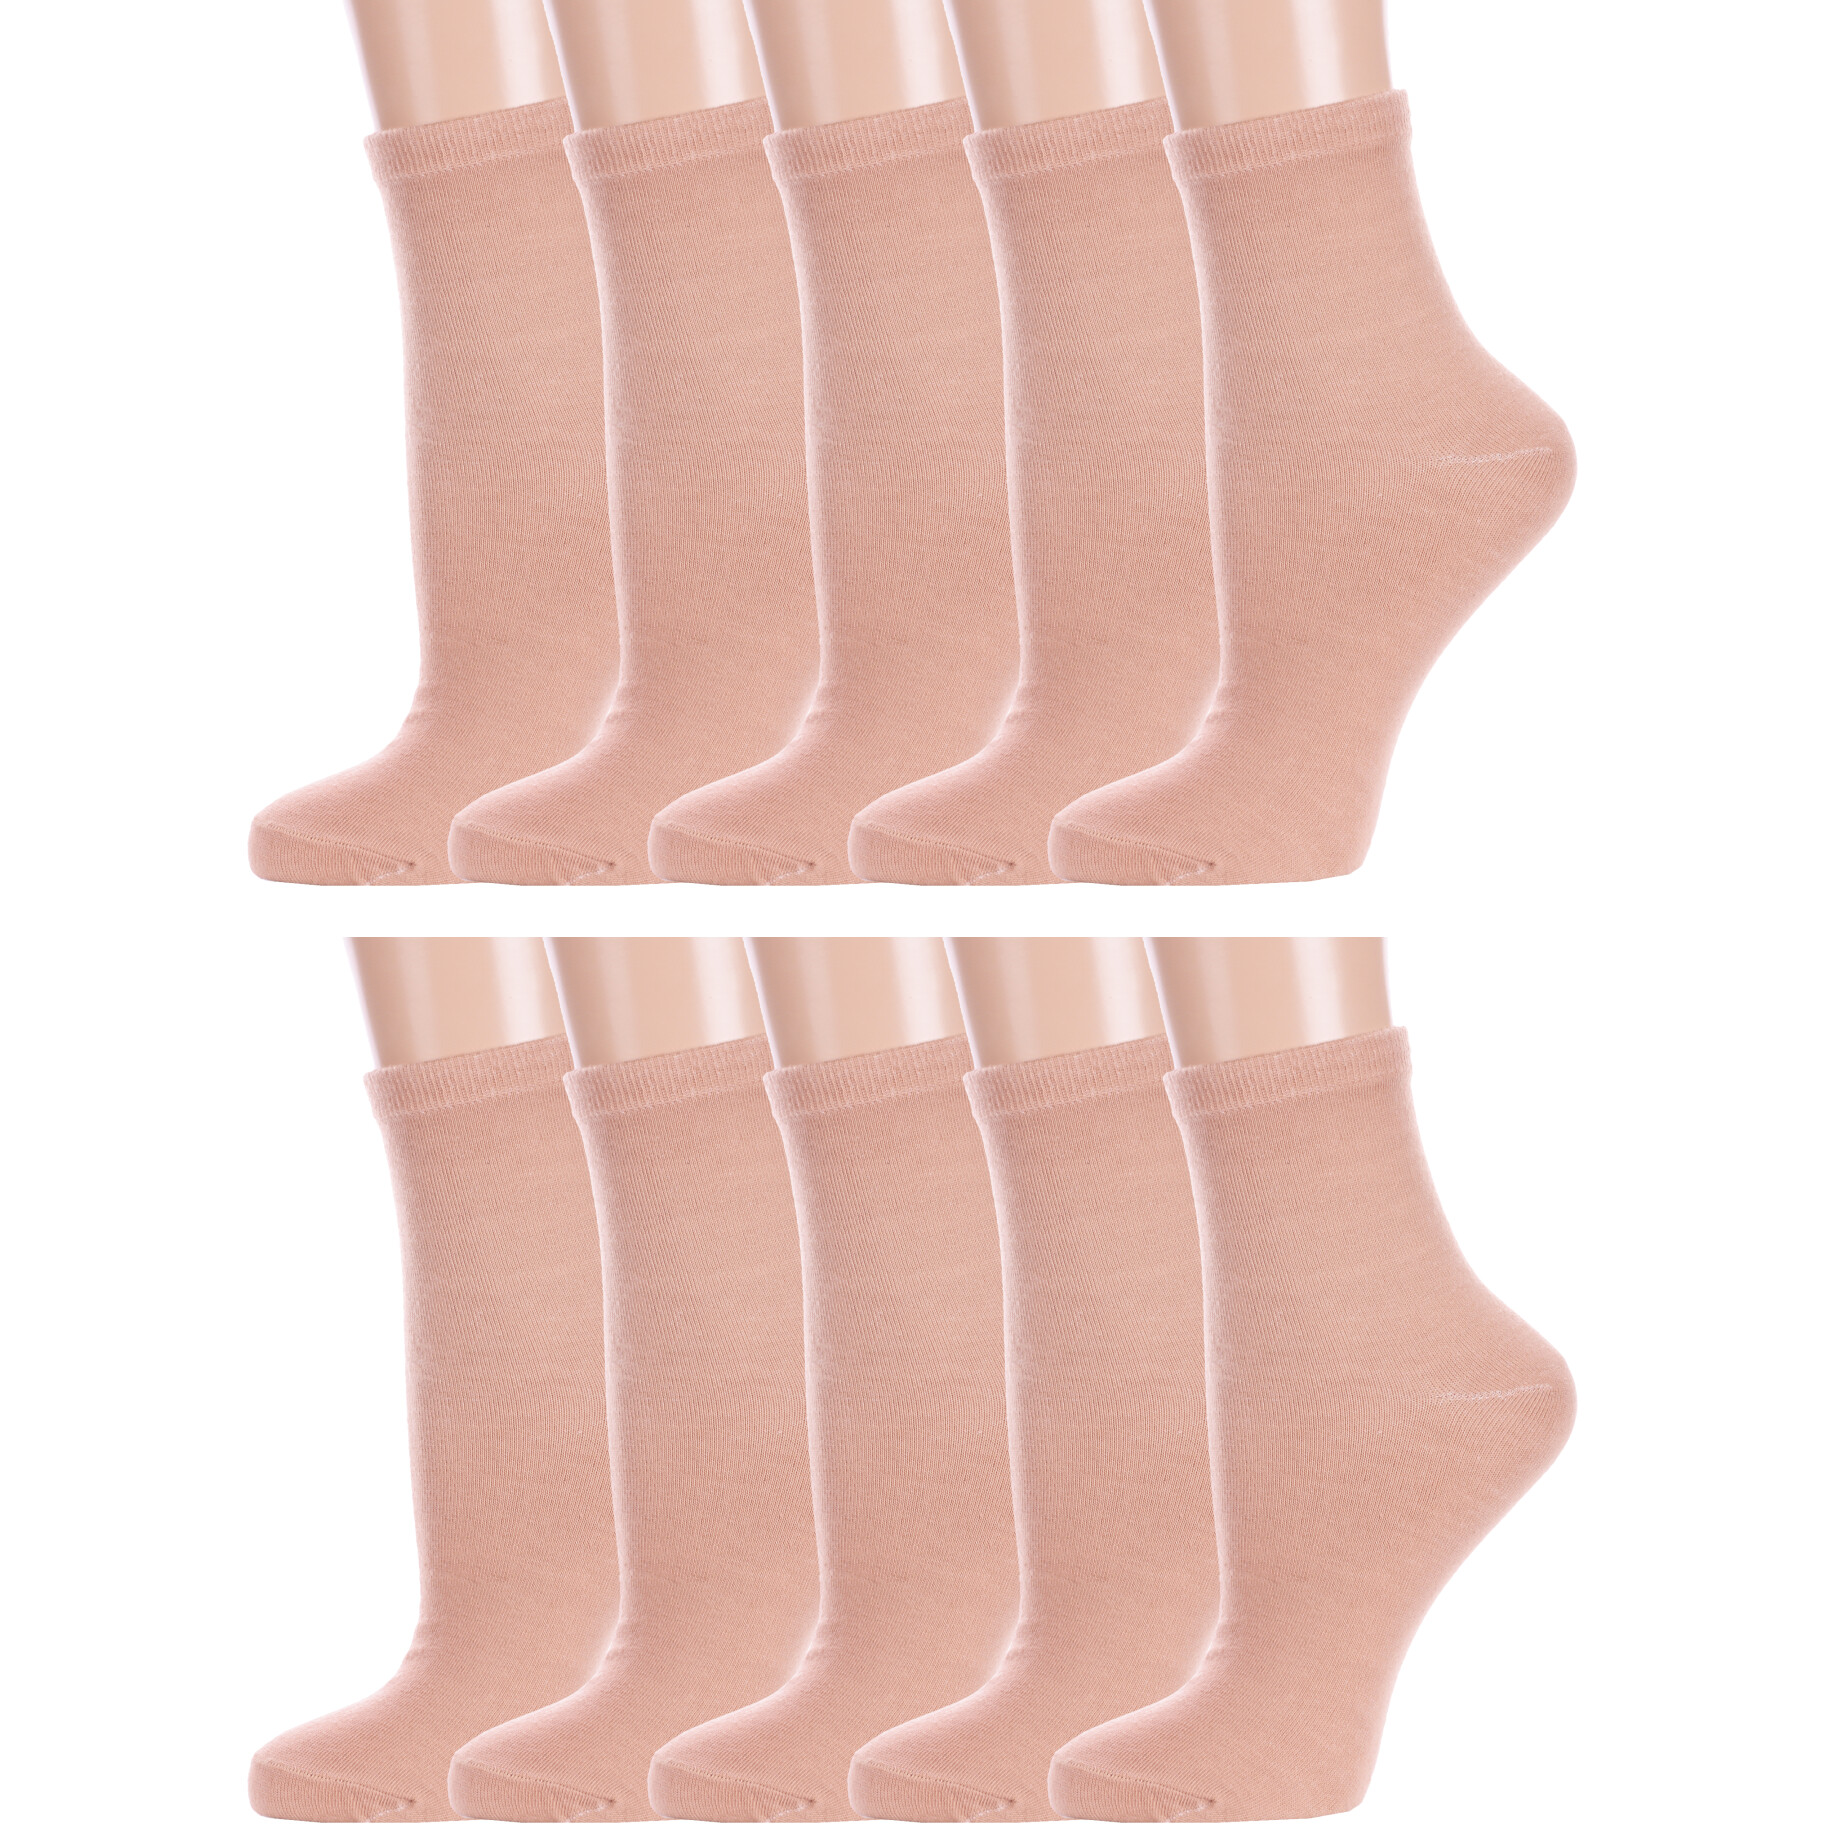 Комплект носков женских Hobby Line 10-Нжх339-19 коричневых 36-40, 10 пар